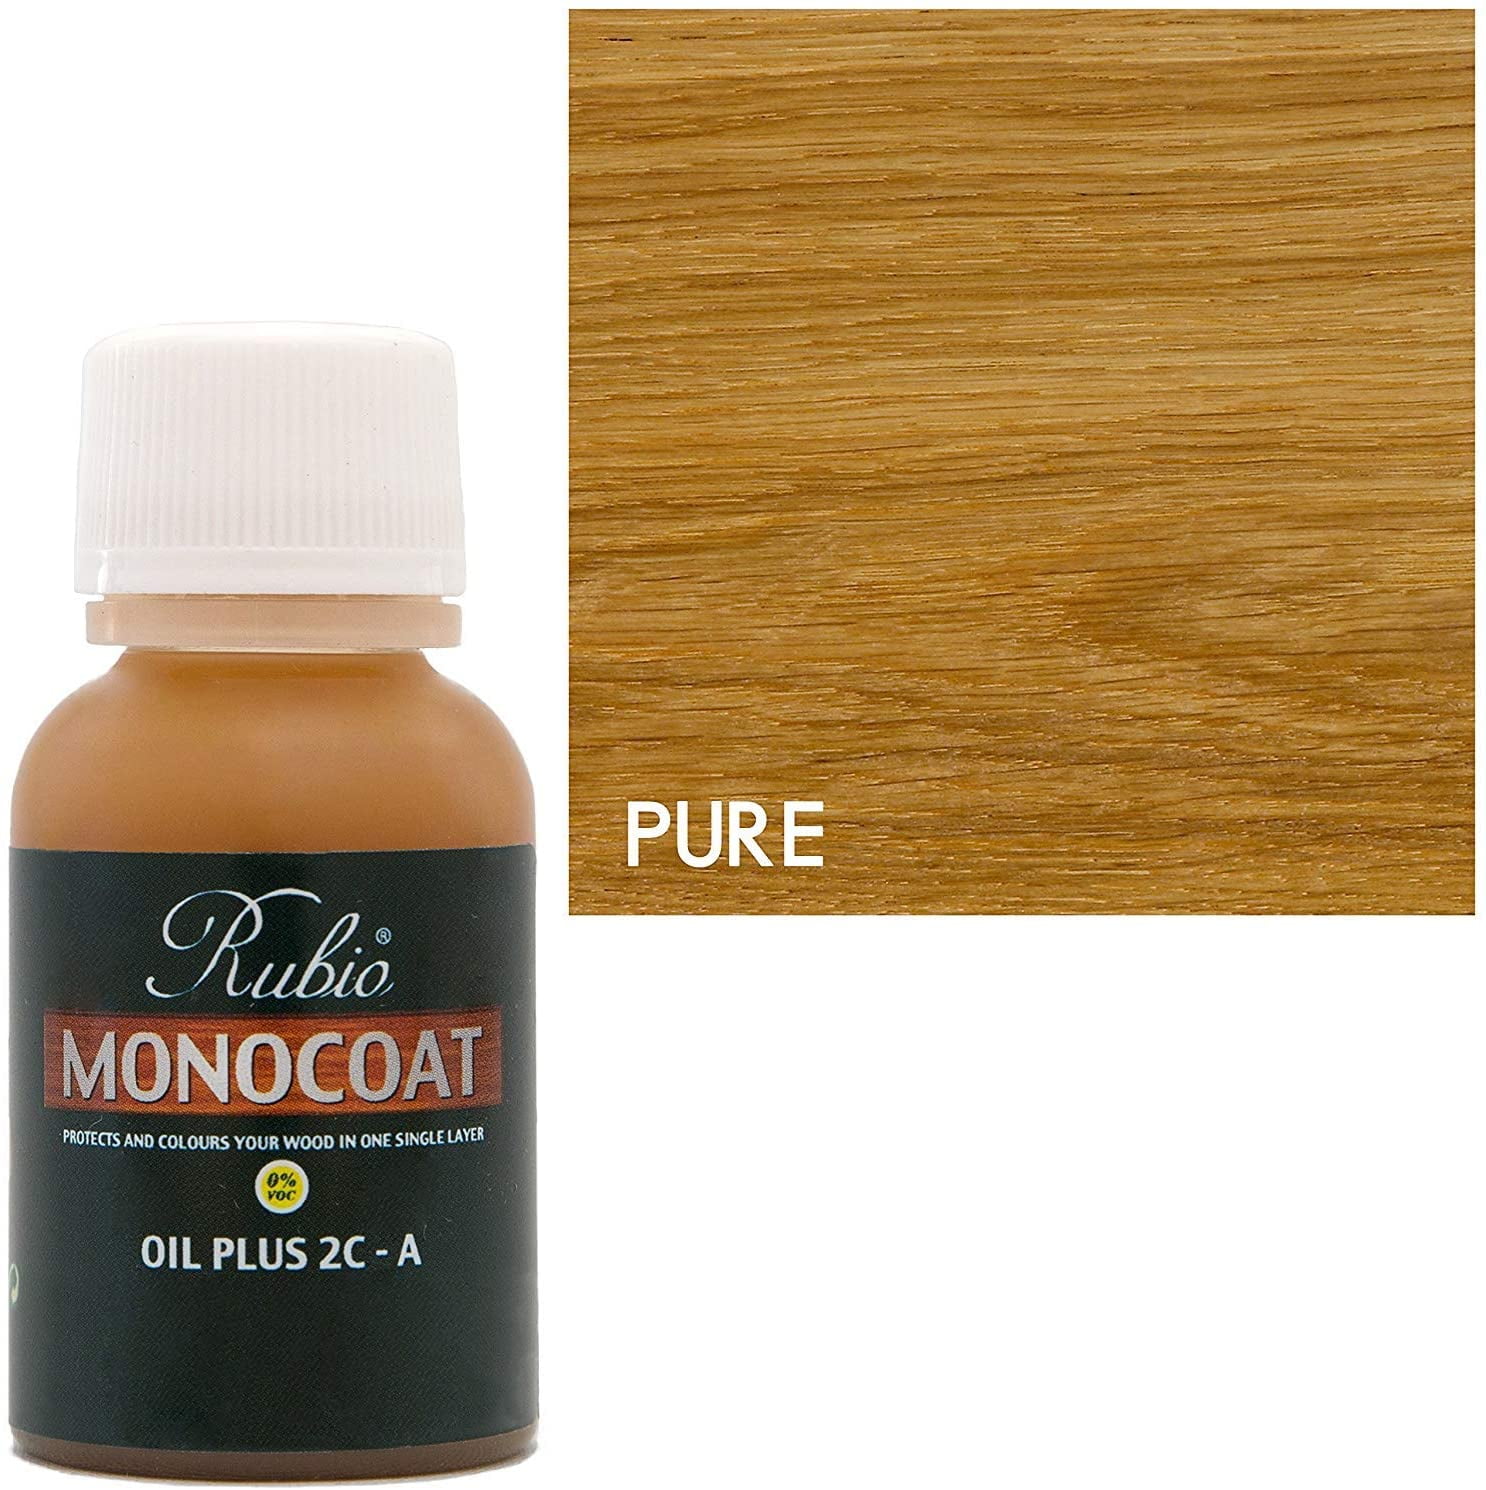 Rubio Monocoat Oil Plus 2C-A Sample Wood Stain Pure 20ml 